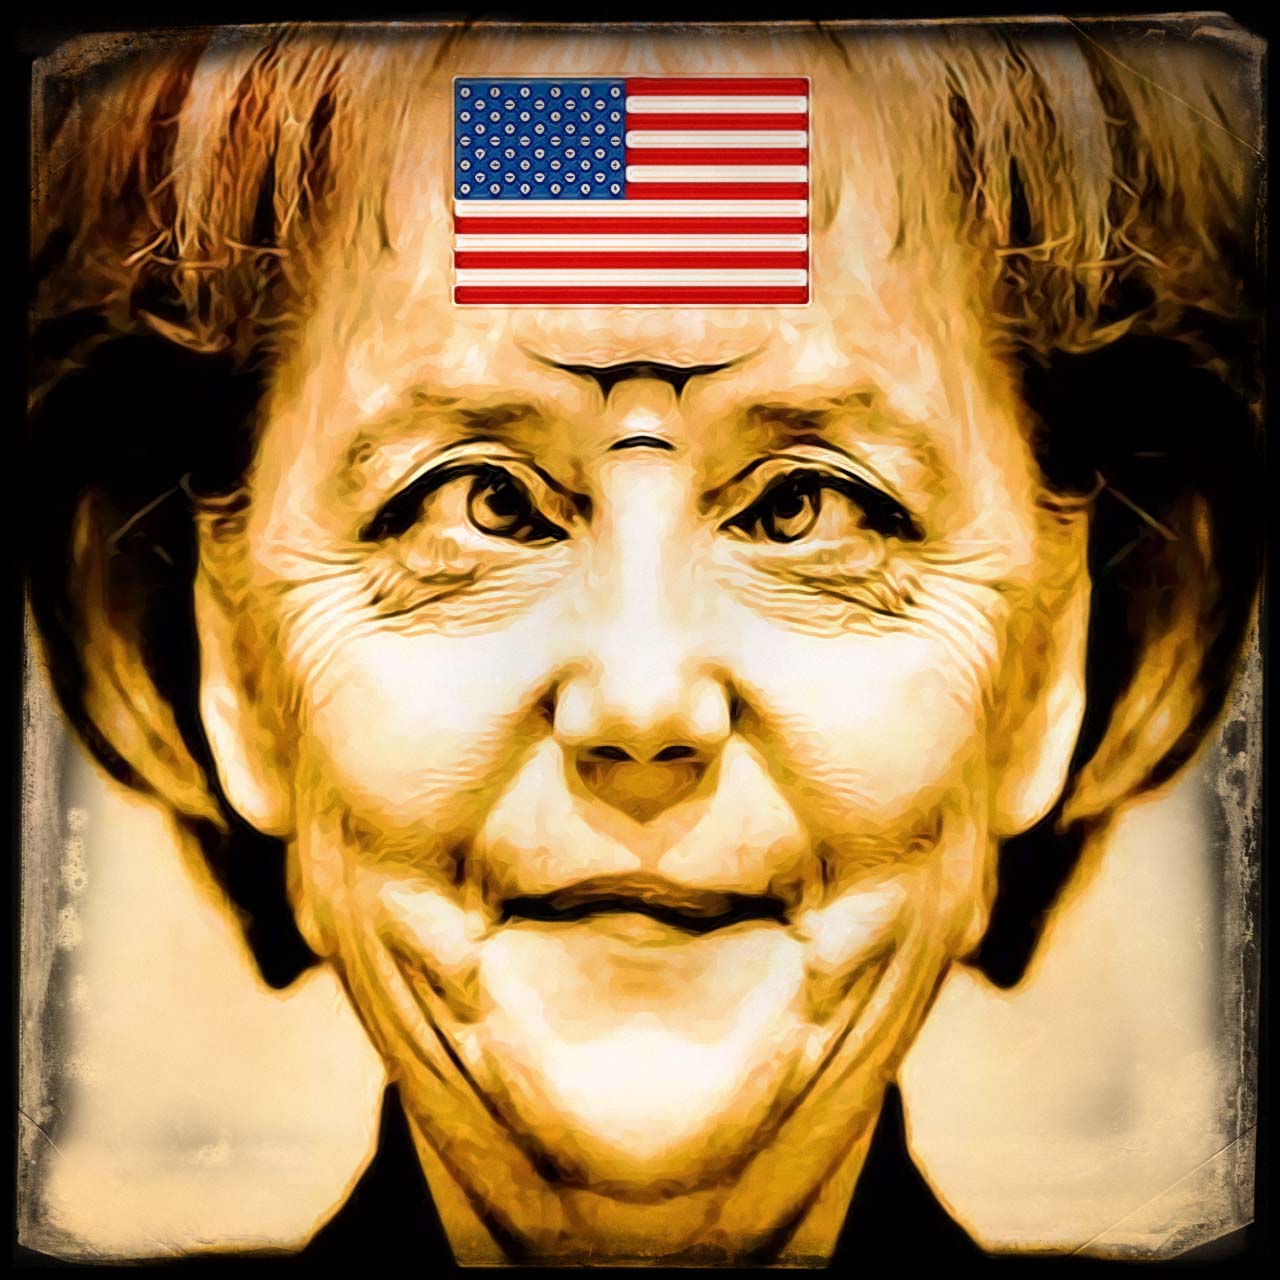 Angela Merkel USRAEL Marionette enttarnt Petition Absetzung Amtsenthebung Deutschland Regierungswechsel Uebergangsregierung CDU CSU SPD Bundesregierung Verrat Abwahl qpress